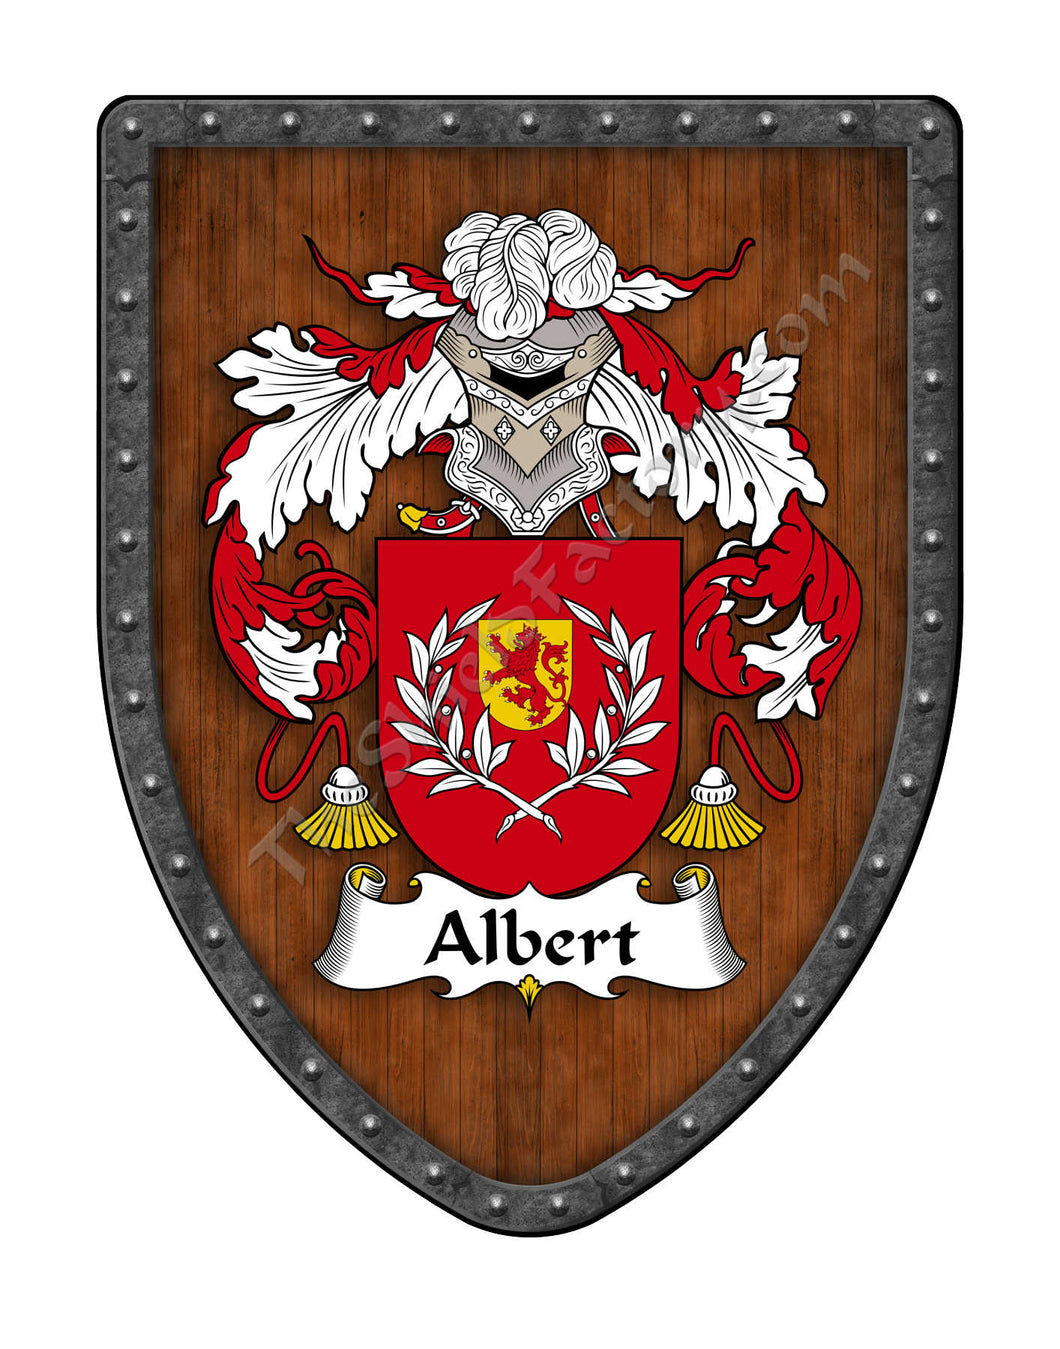 Albert Coat of Arms Family Crest